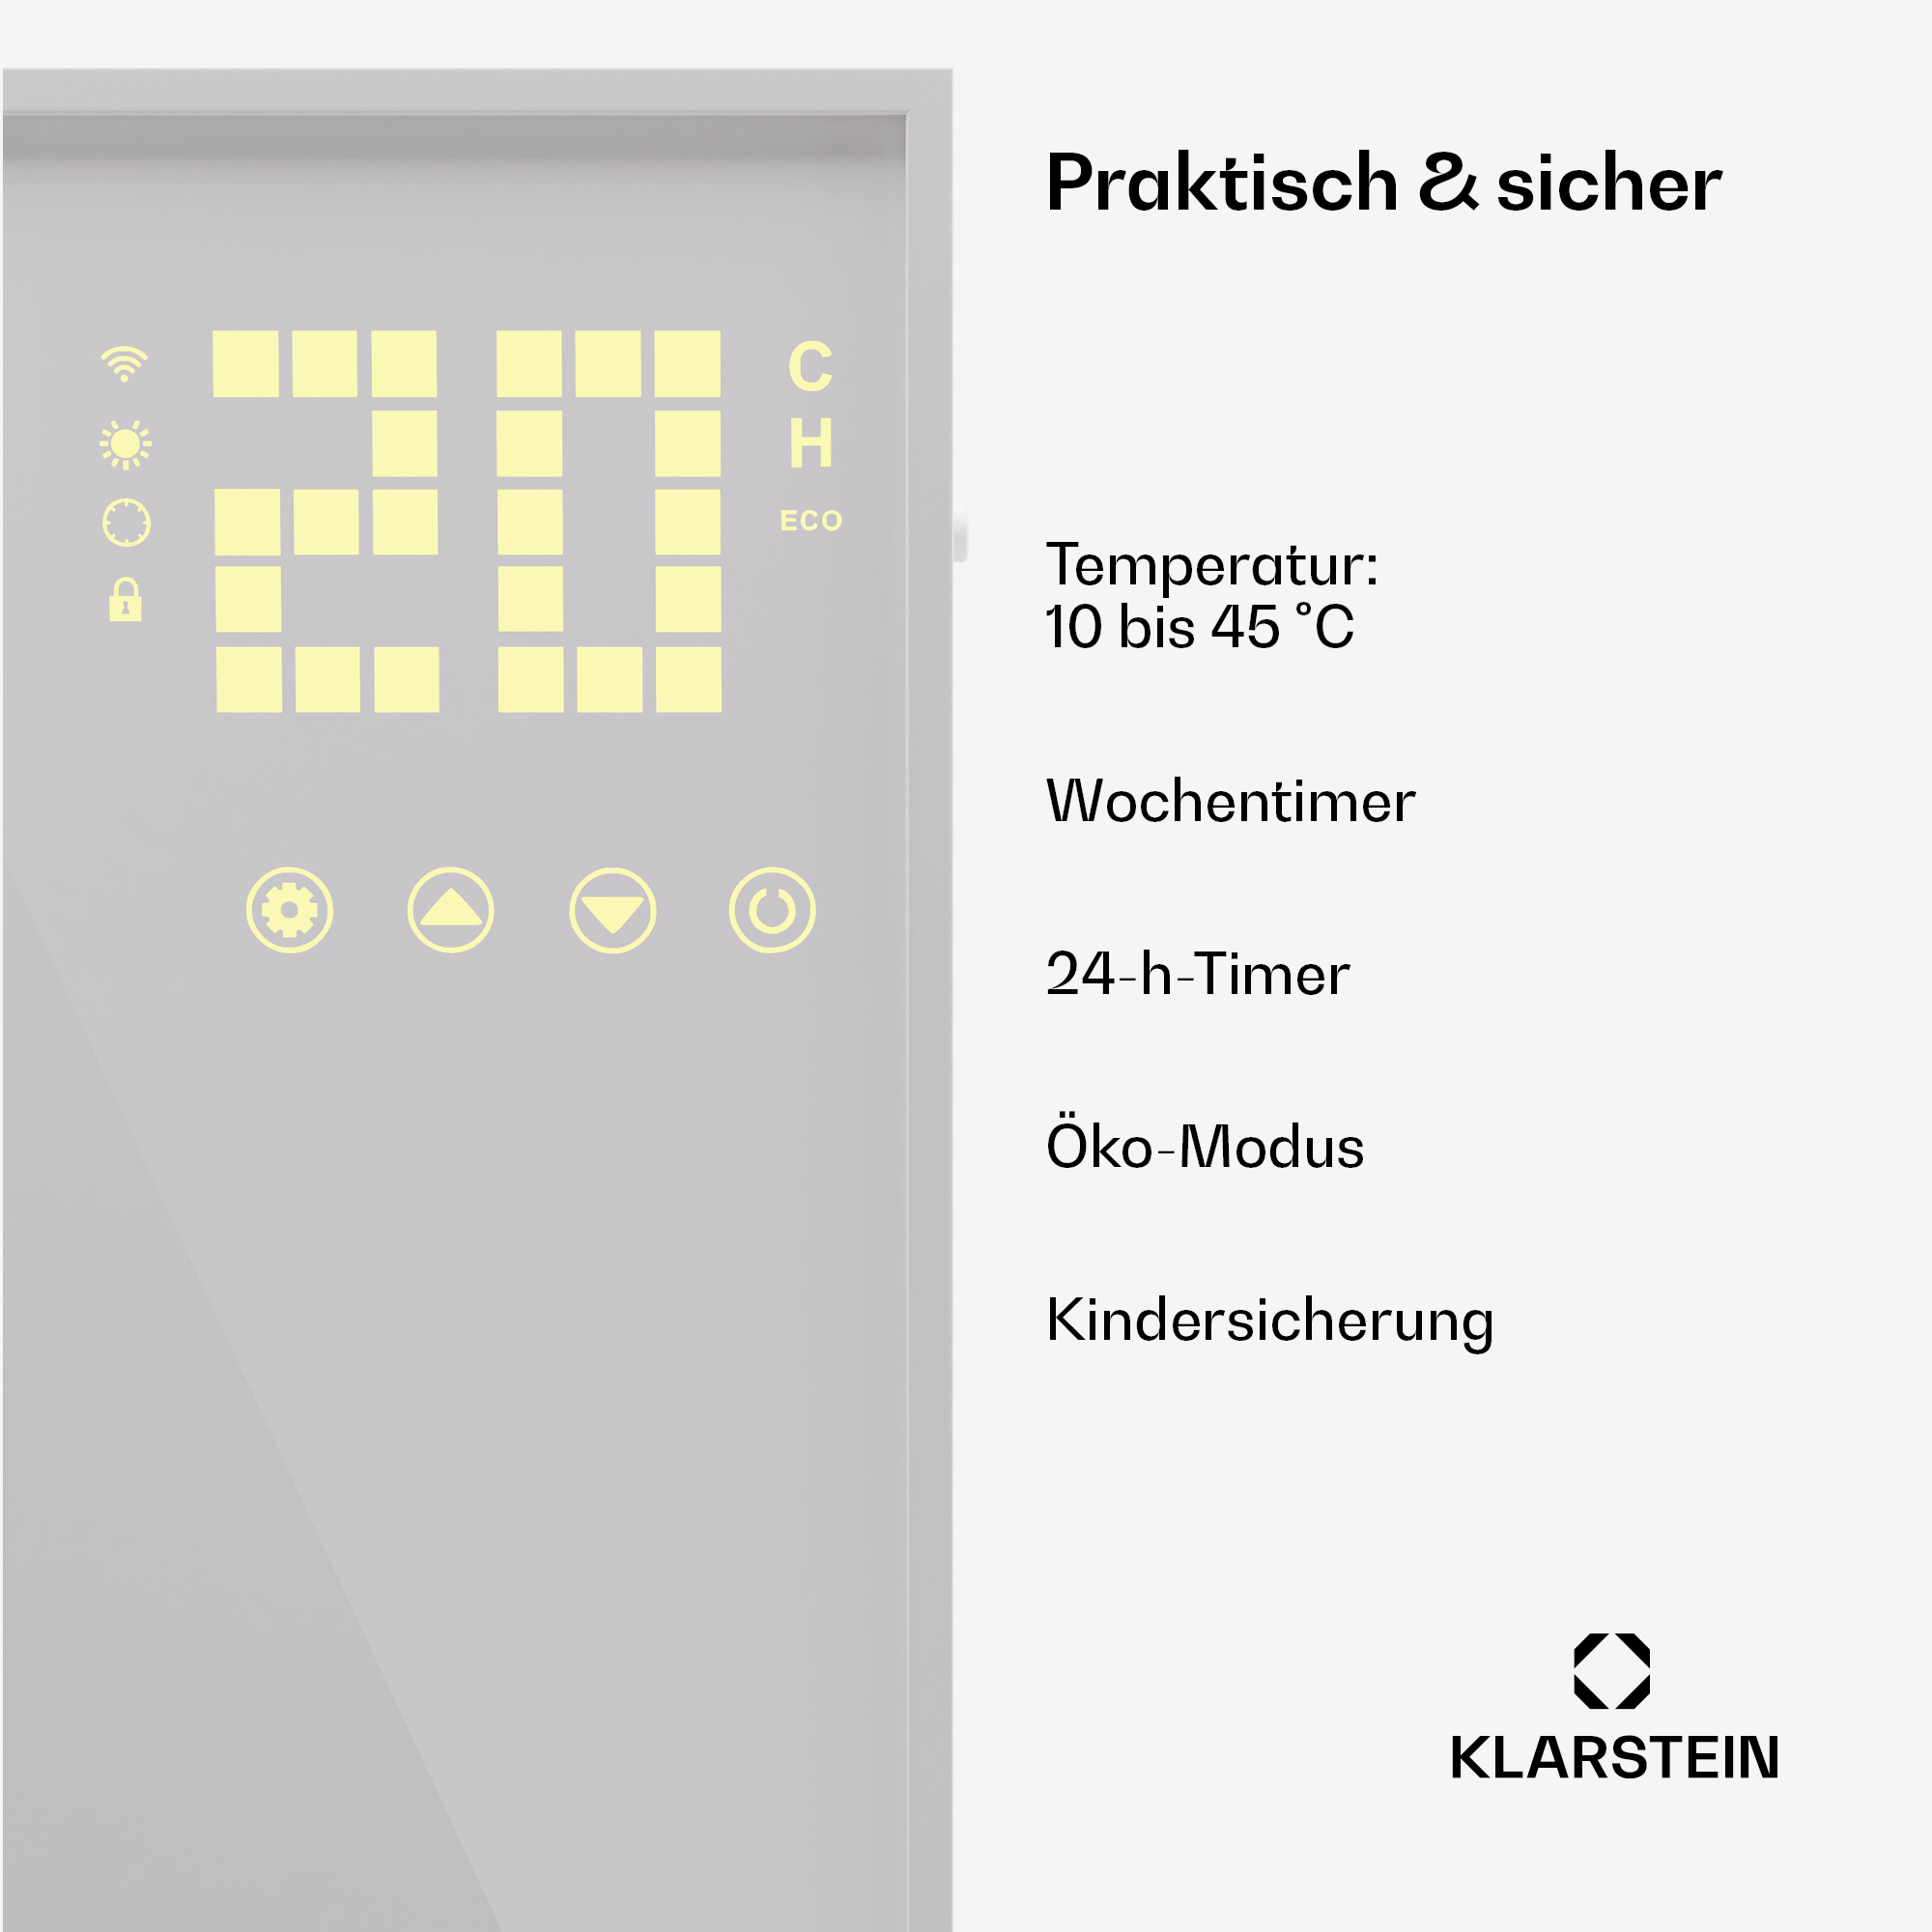 Infrarot-Heizung KLARSTEIN Bornholm (400 Smart Wonderwall Watt)